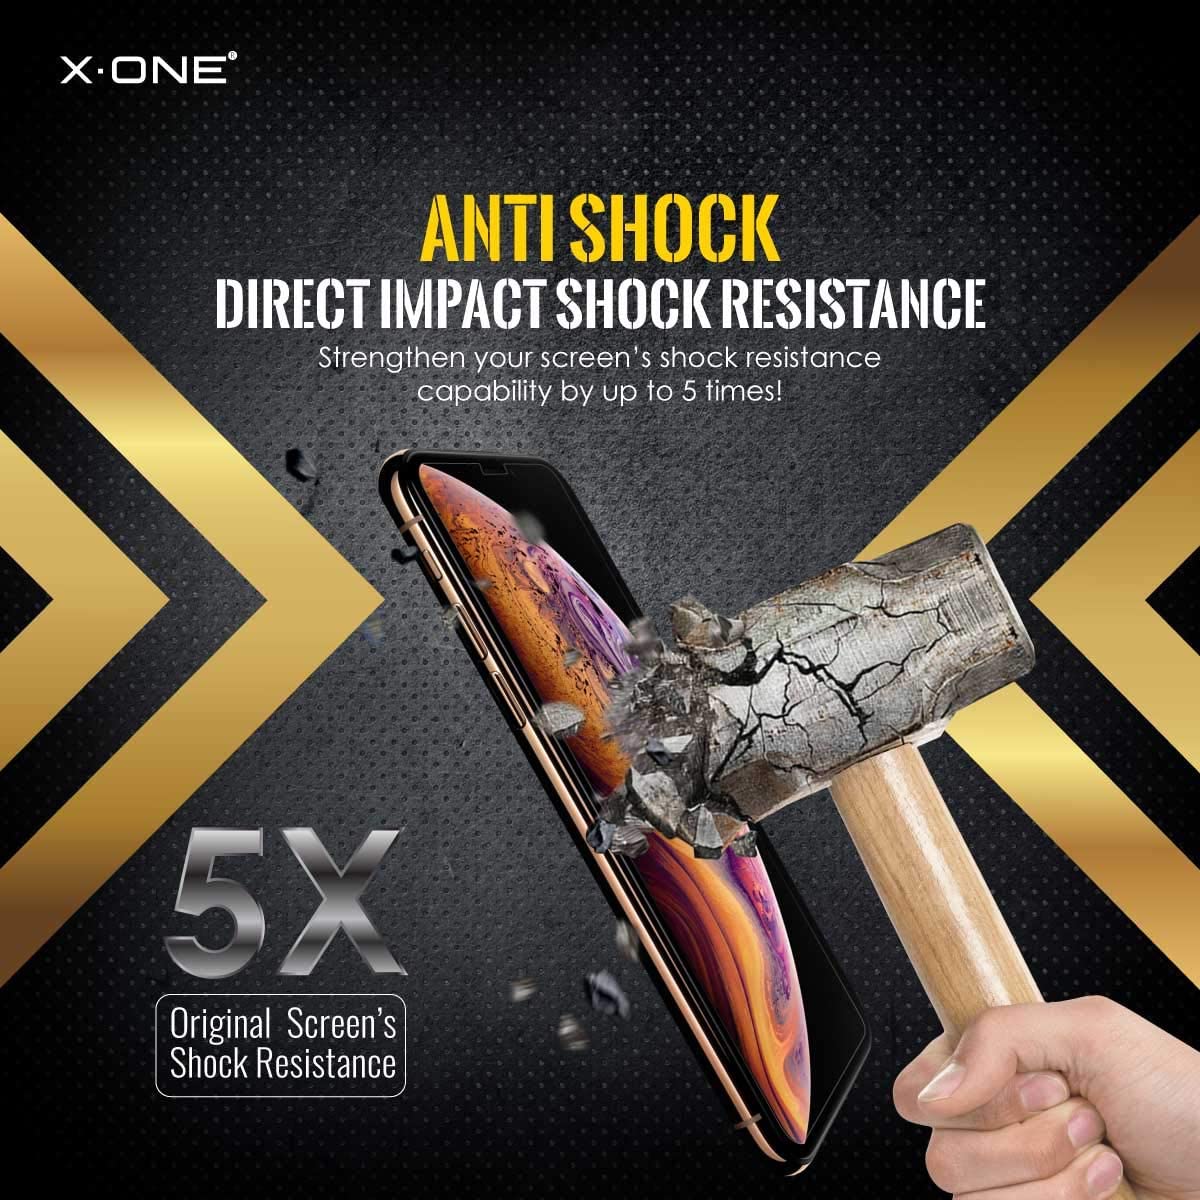 X-ONE Extreme Shock Eliminator для iPhone X черный